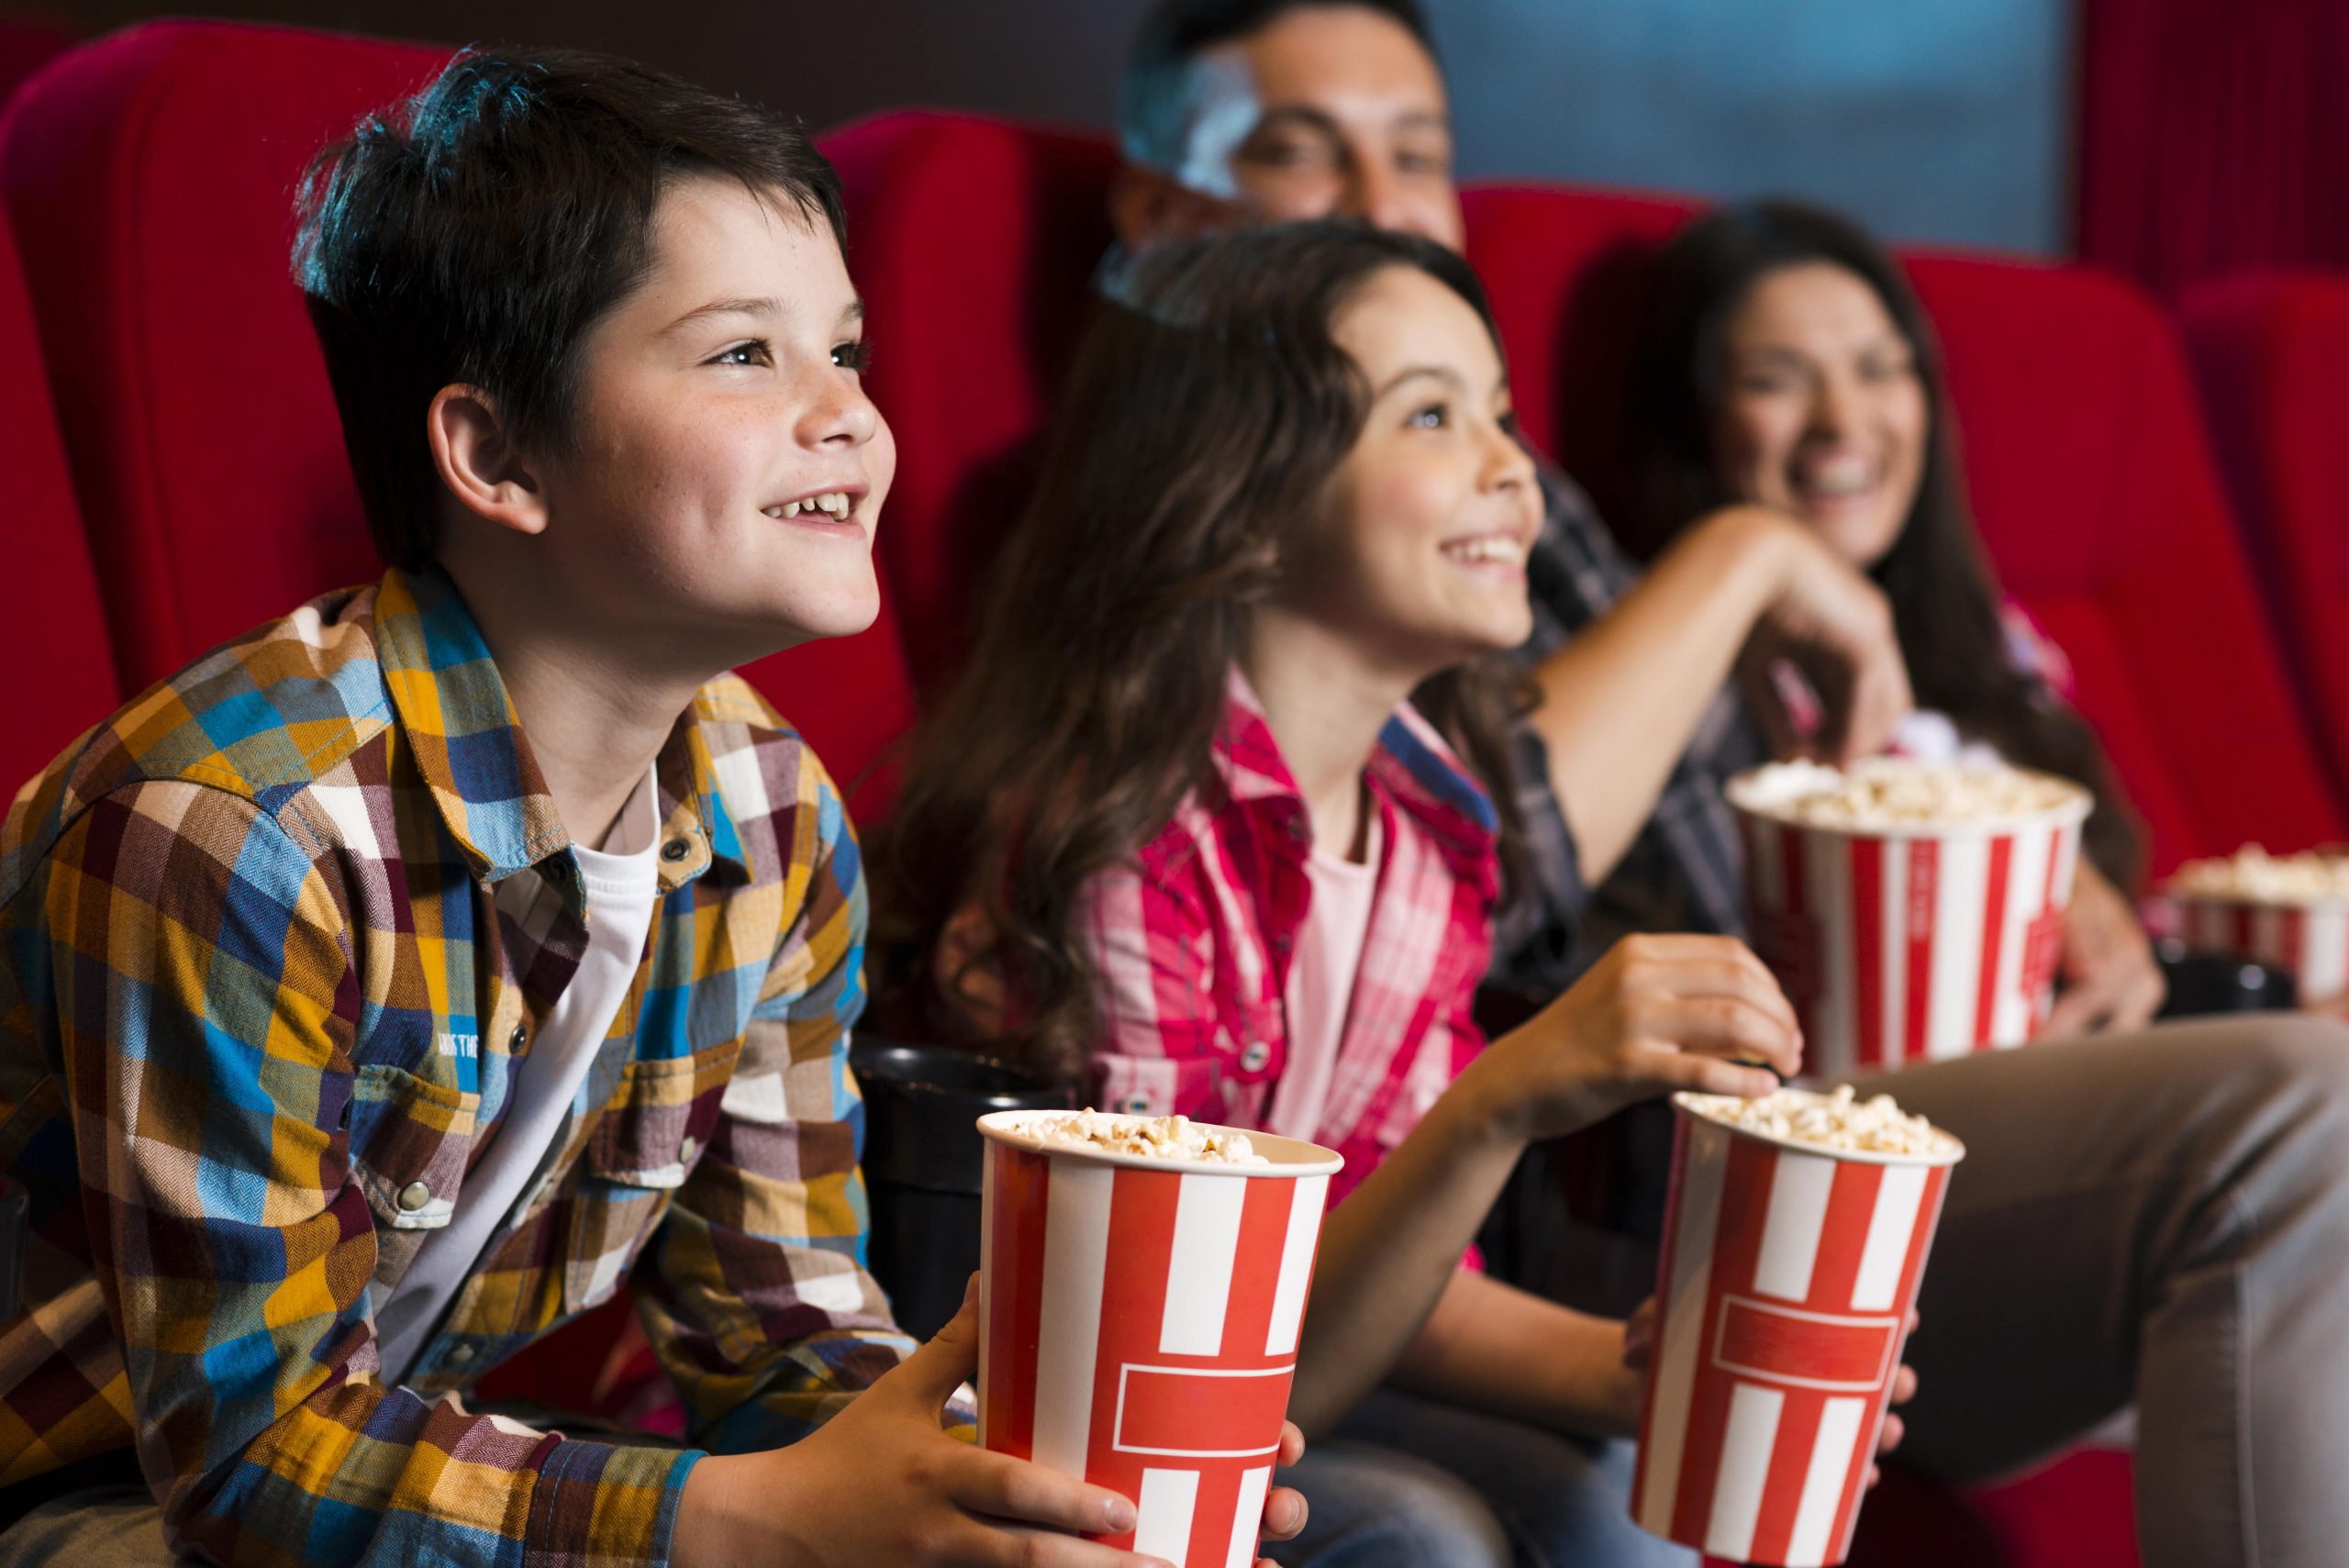 You go to the cinema last night. Дети в кинотеатре. Поход в кинотеатр. Дети в кинотеатре с попкорном. Подростки в кинотеатре с попкорном.